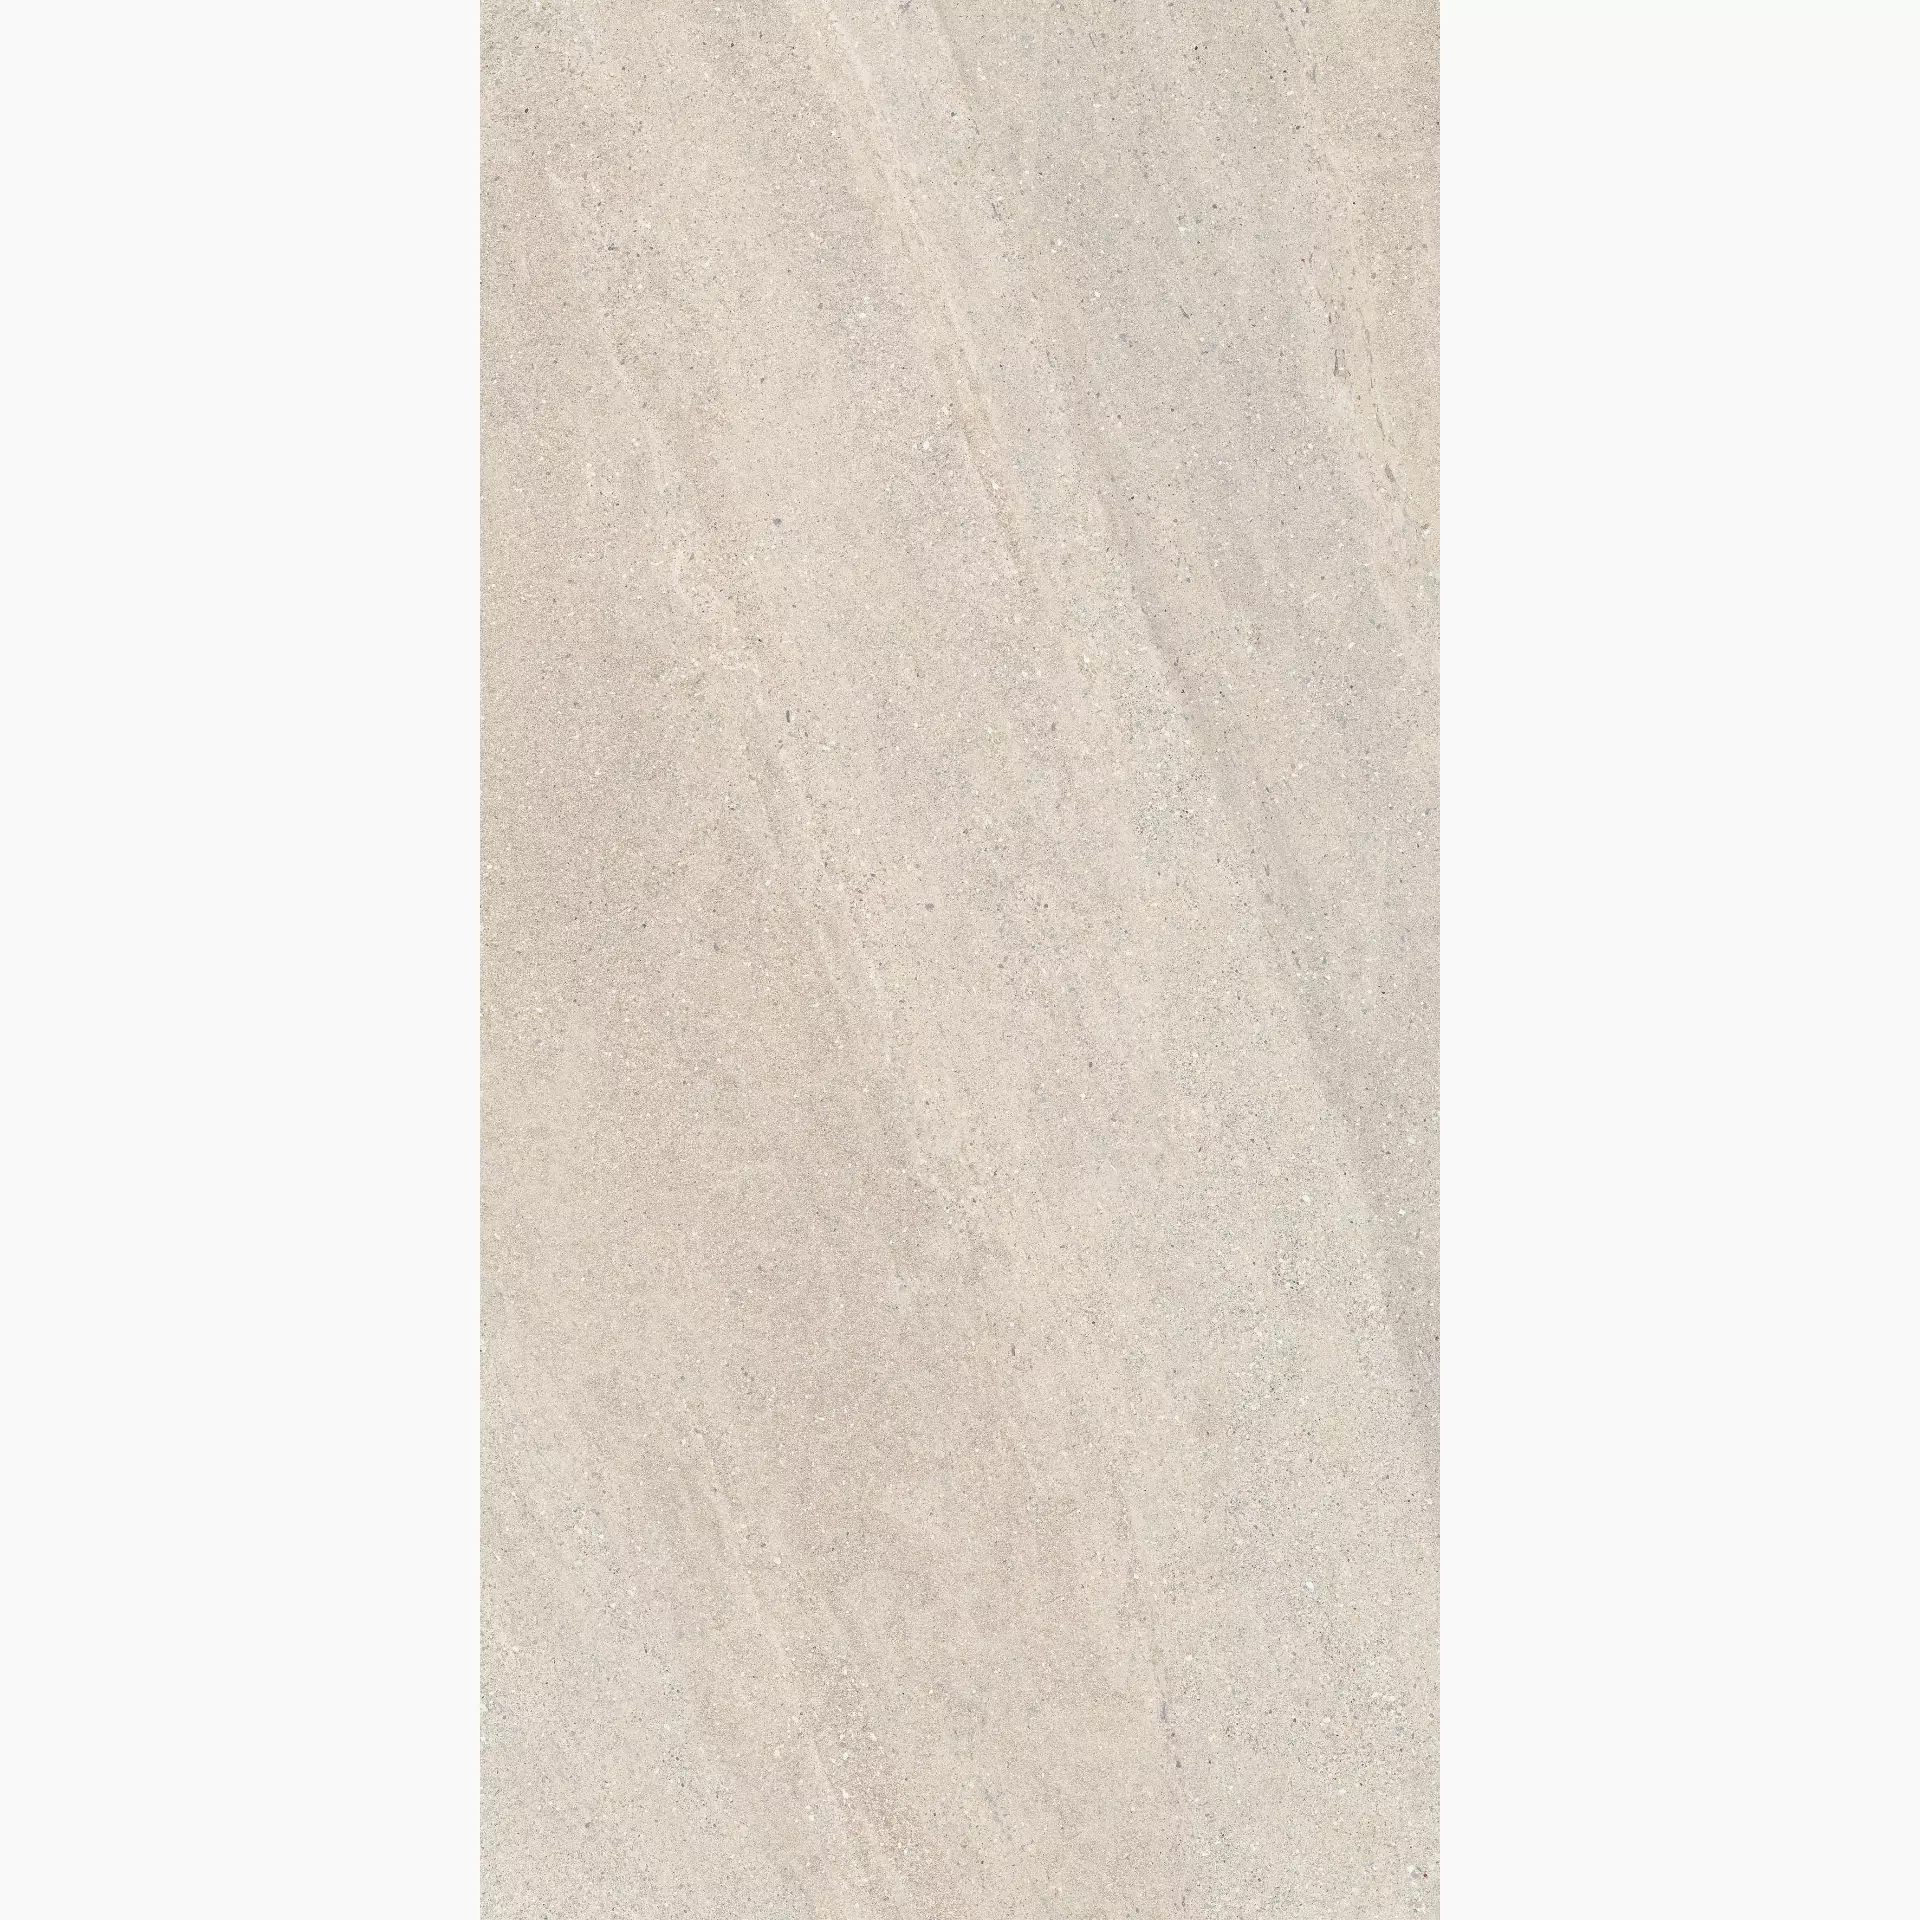 Flaviker Rockin Desert Grip PF60010142 60x120cm rectified 8,5mm